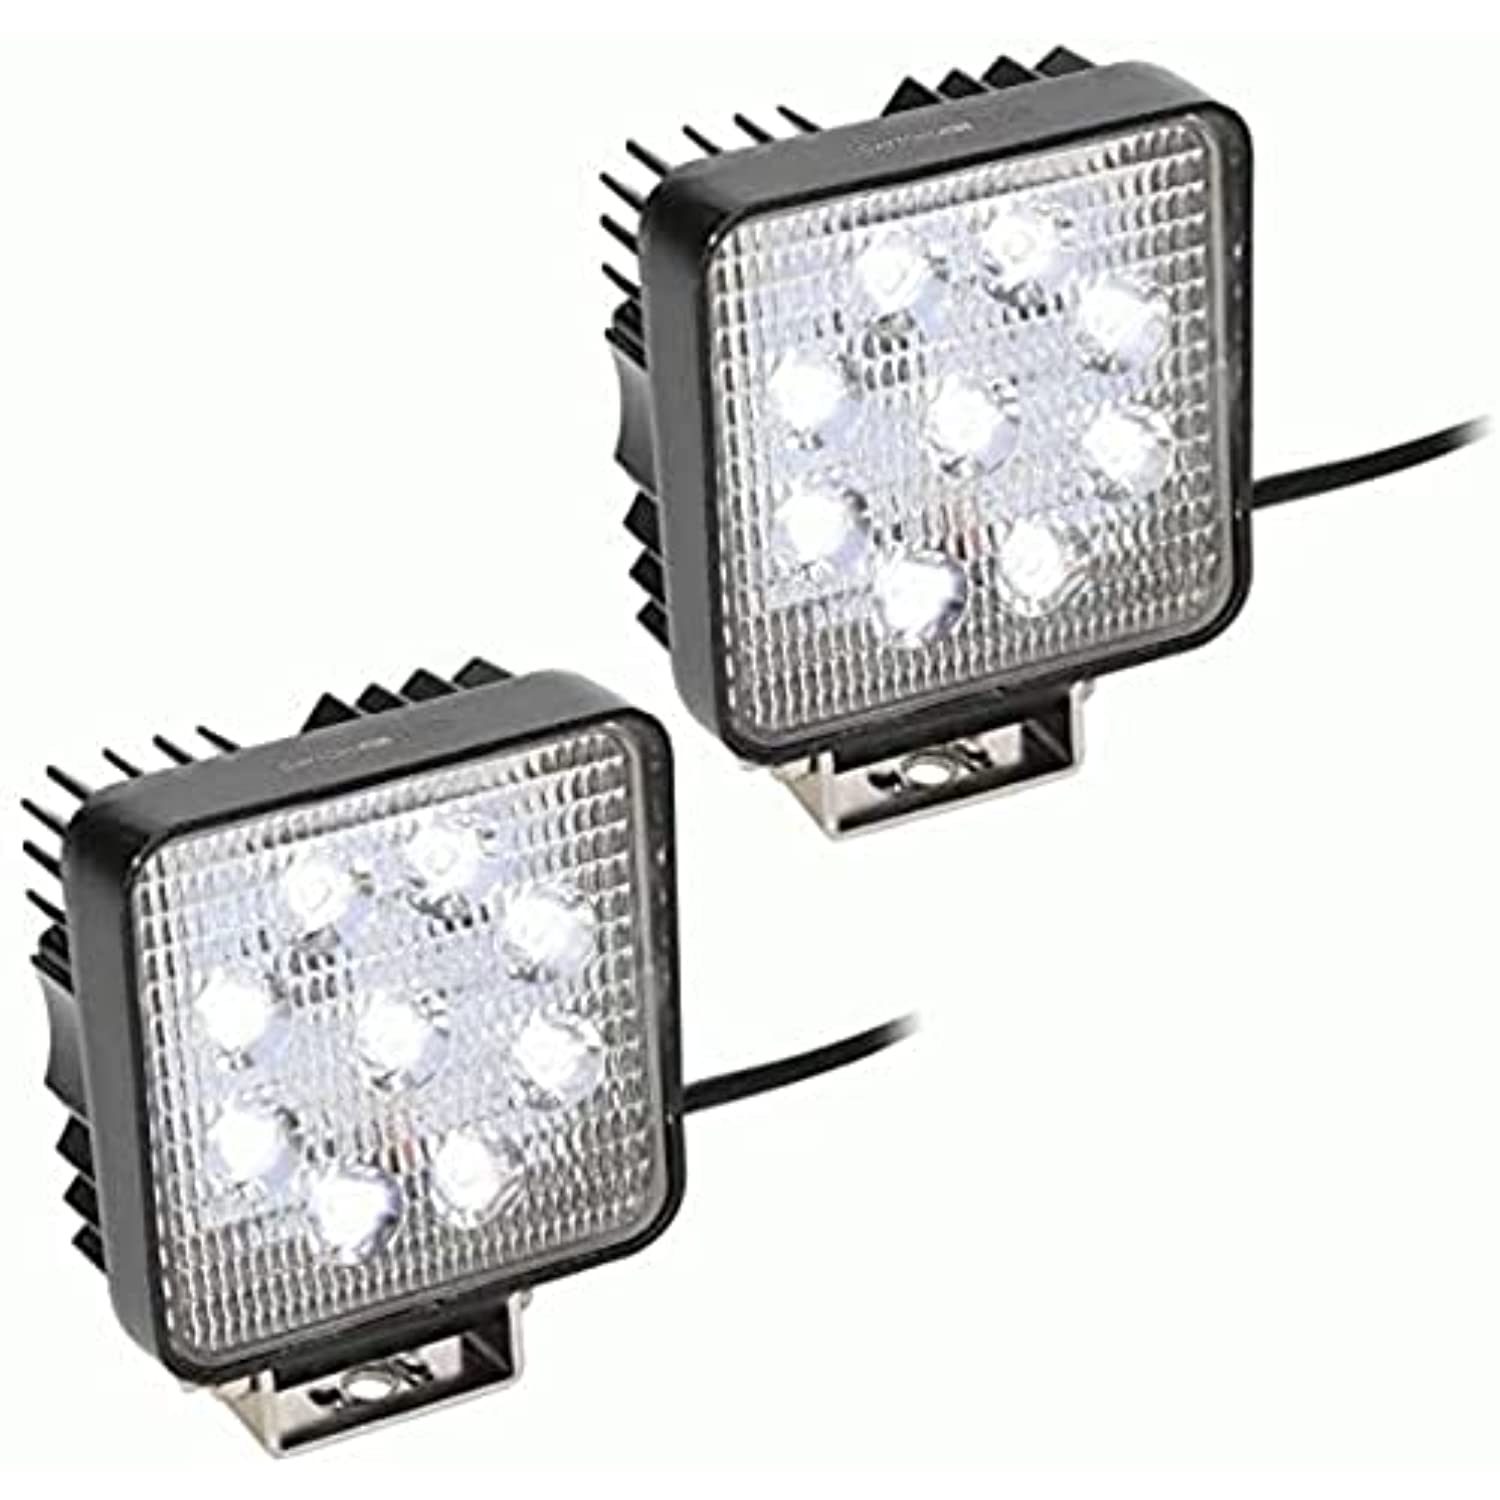 METRA - Square Driving Lights - 9 LED (DL-DL4S)